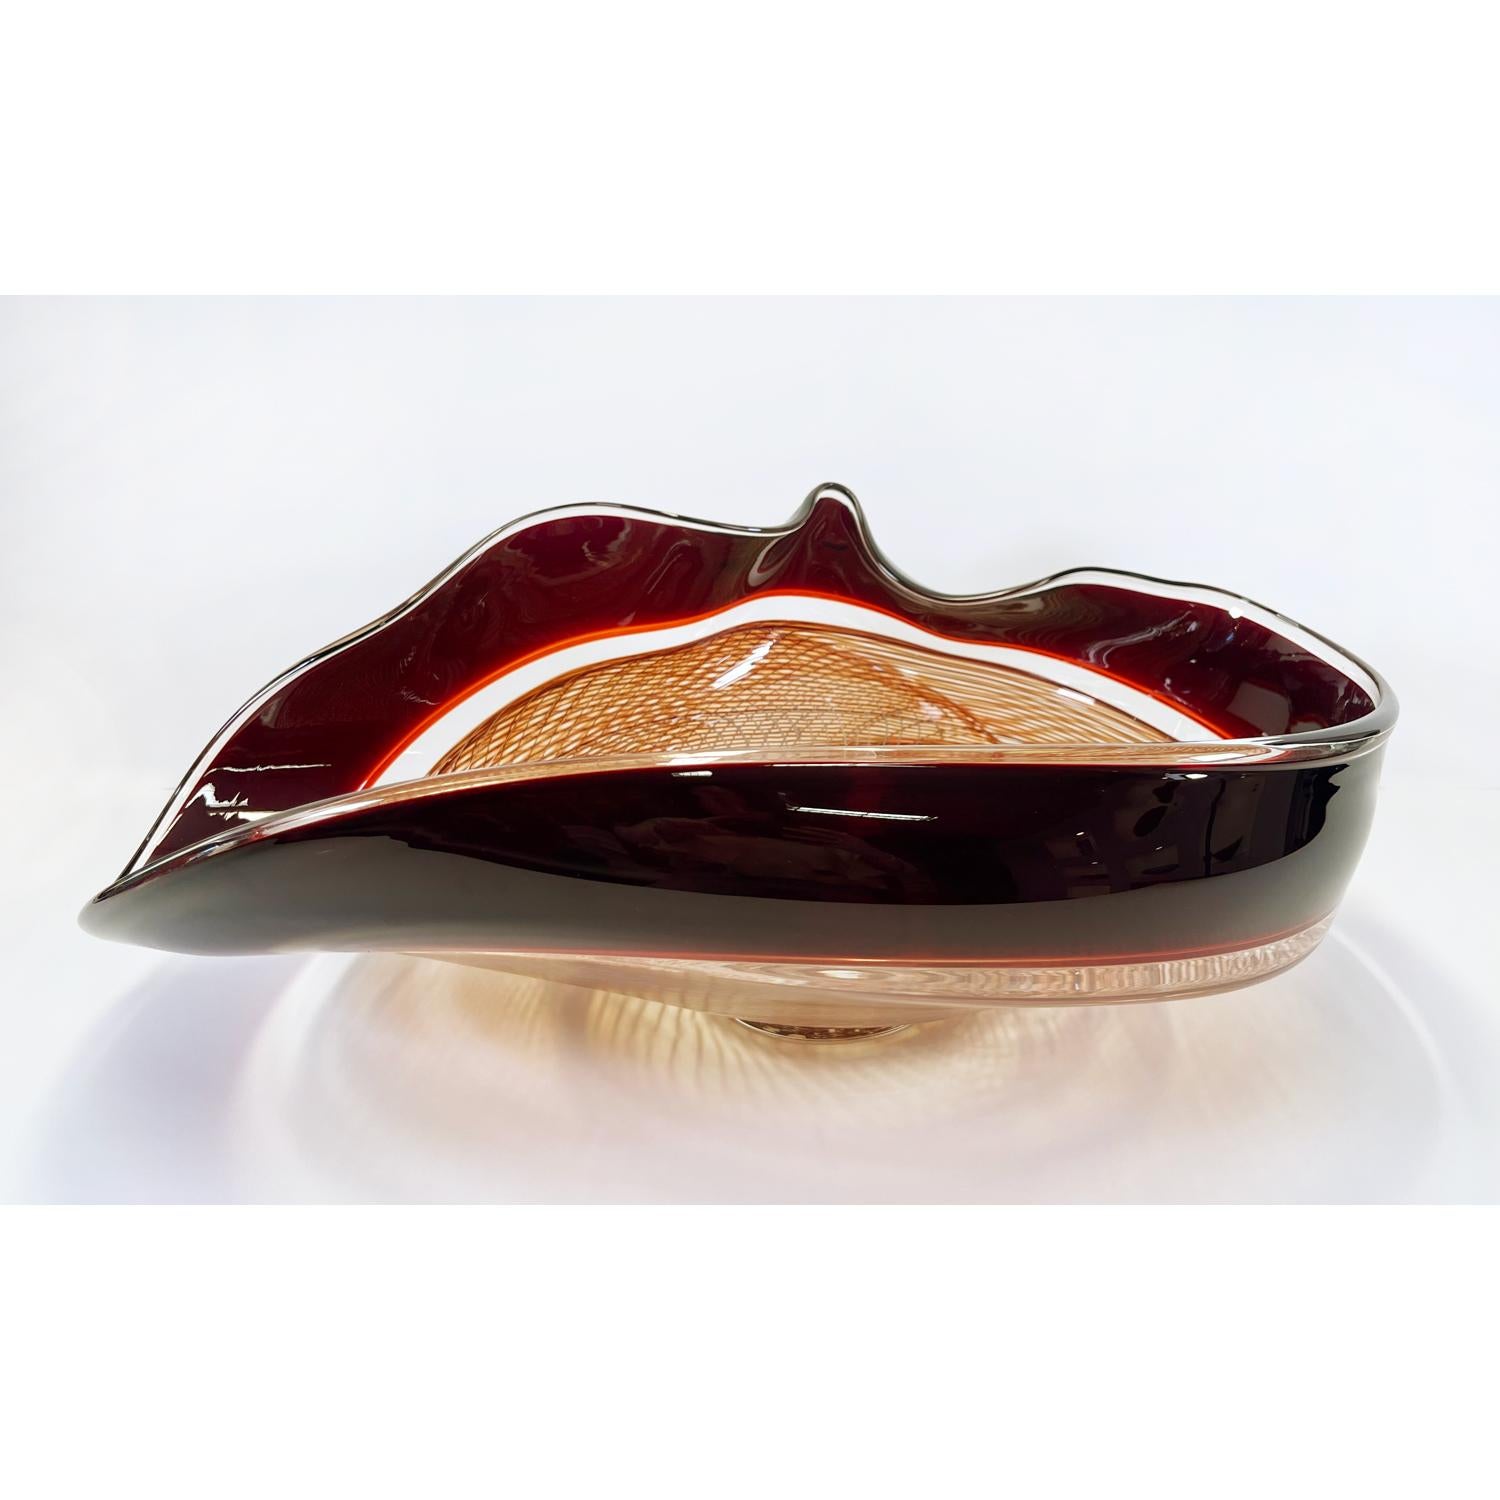 David Thai Abstract Sculpture - Amber/Autumn Red Rondelle Bowl, Modern Canadian Glass Sculpture, 2023